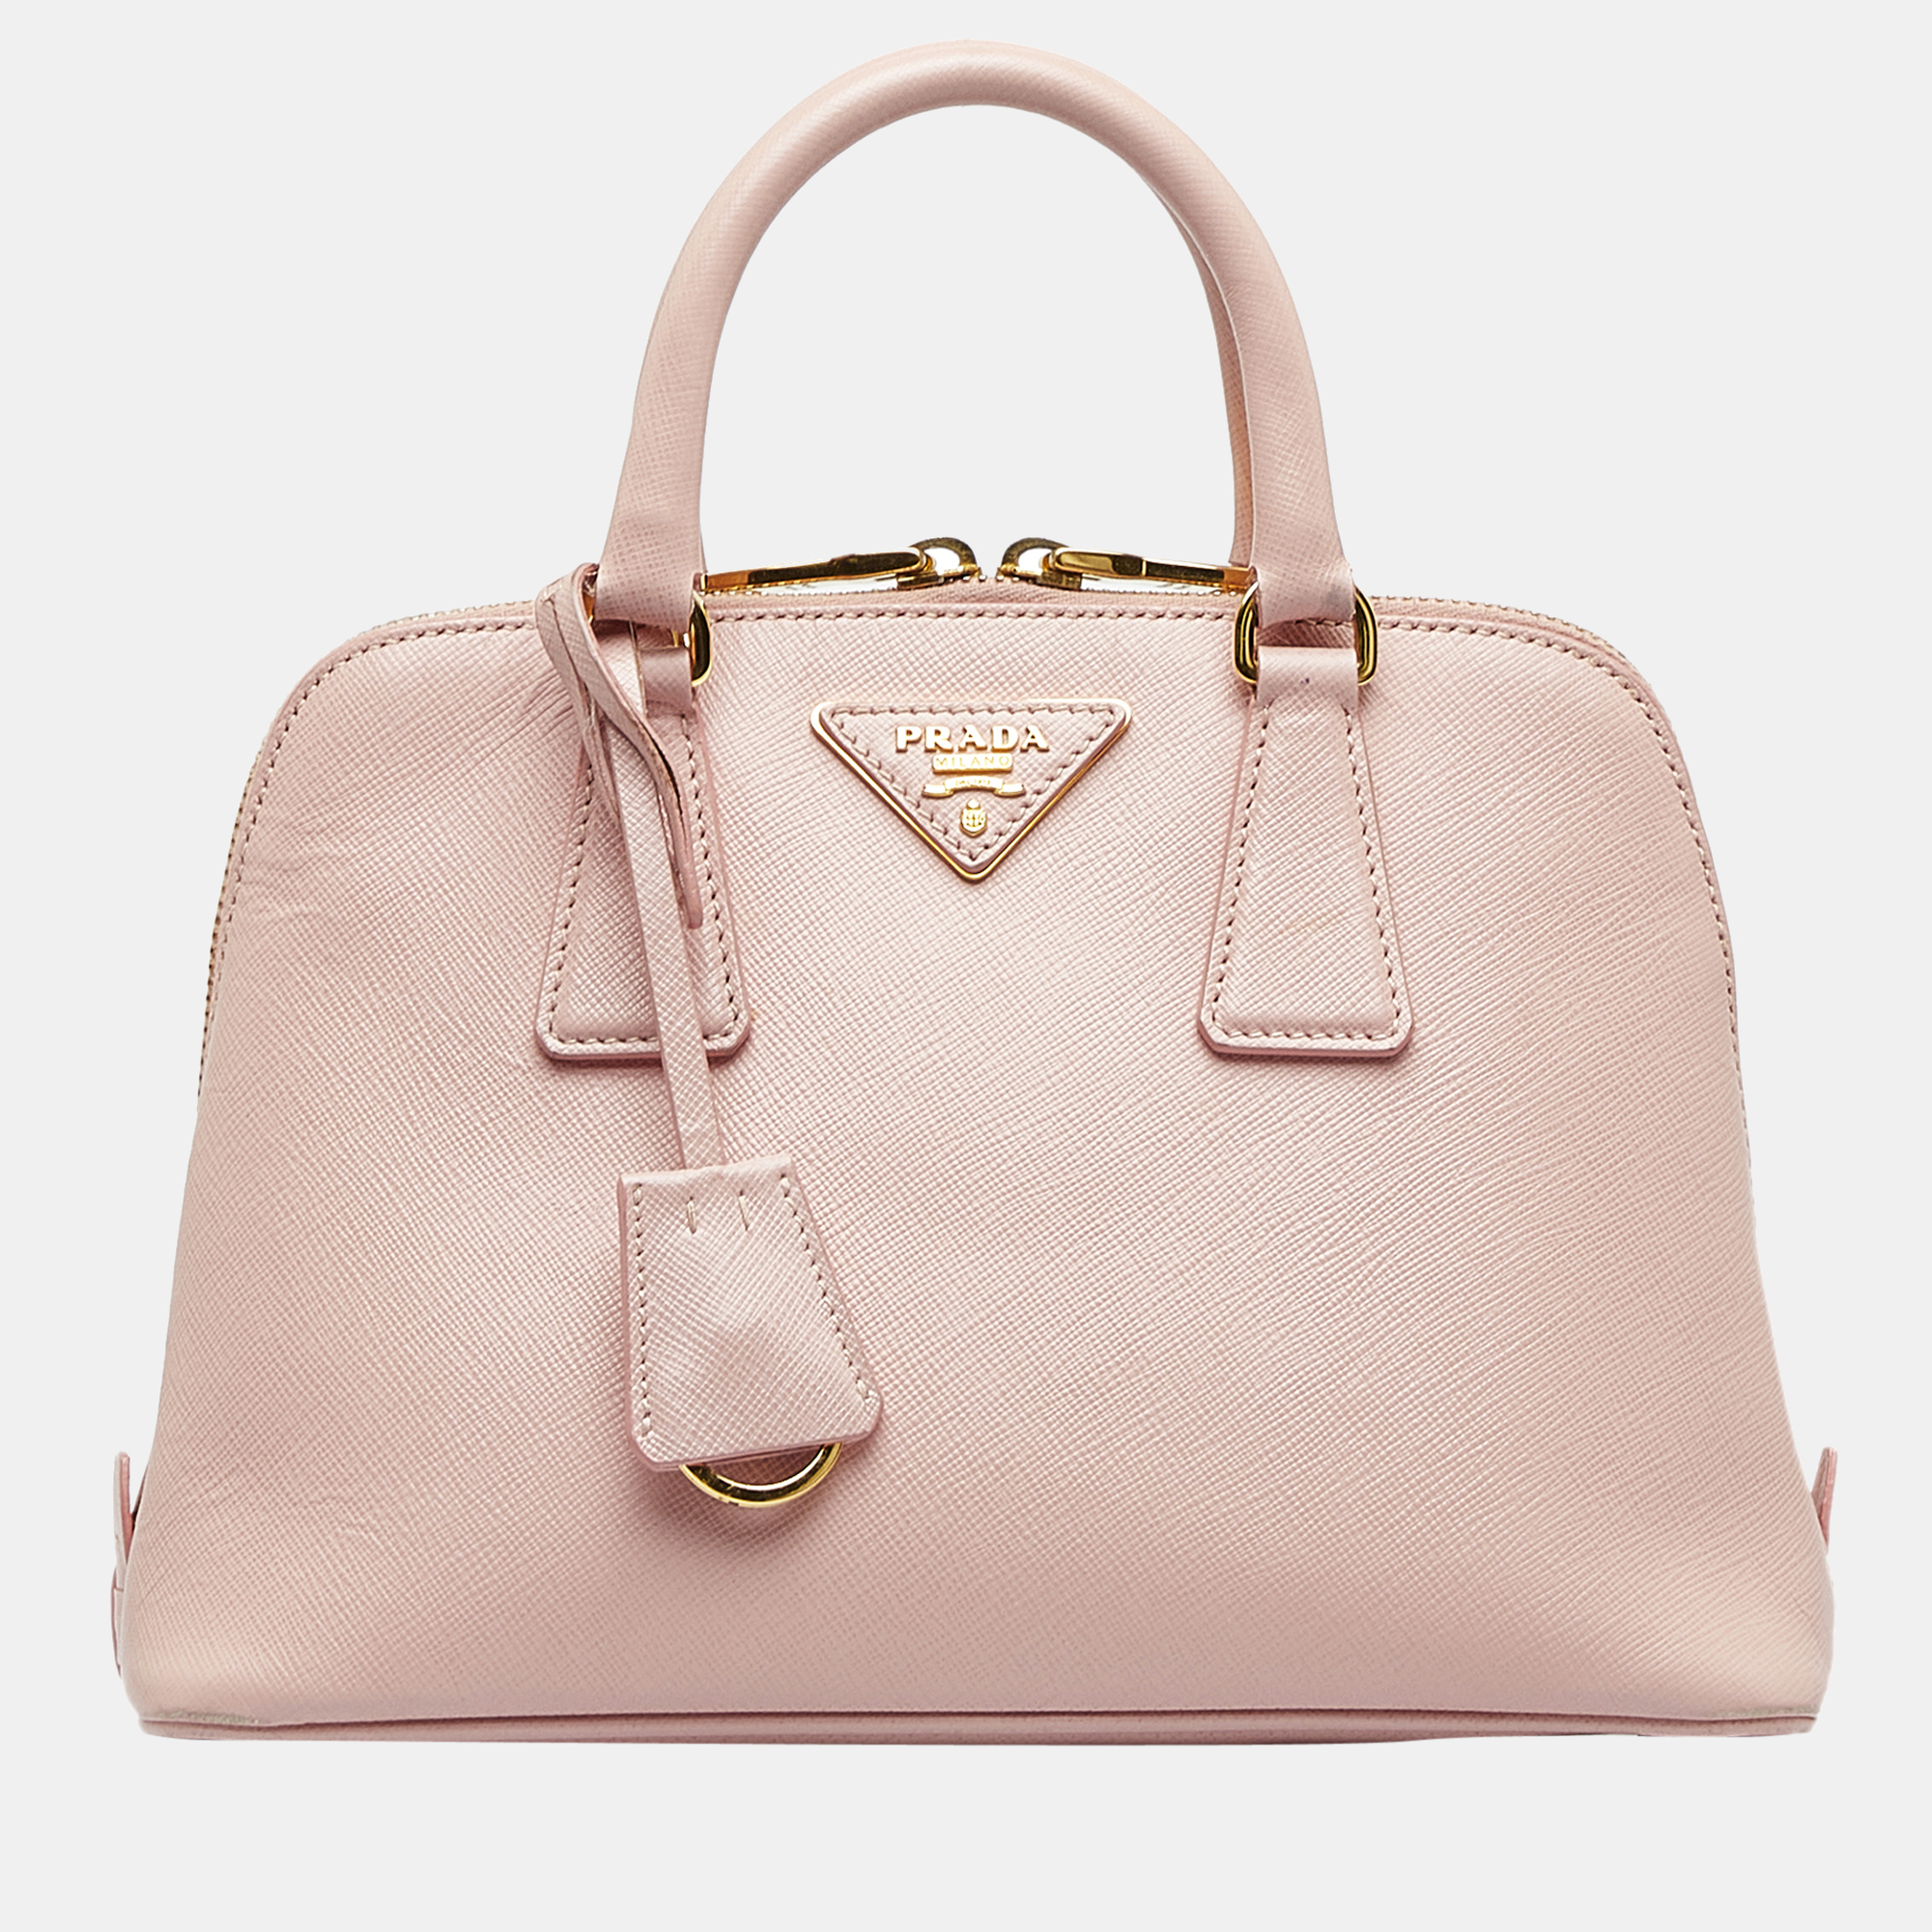 Prada Promenade Bag Saffiano Leather Small Pink 990851